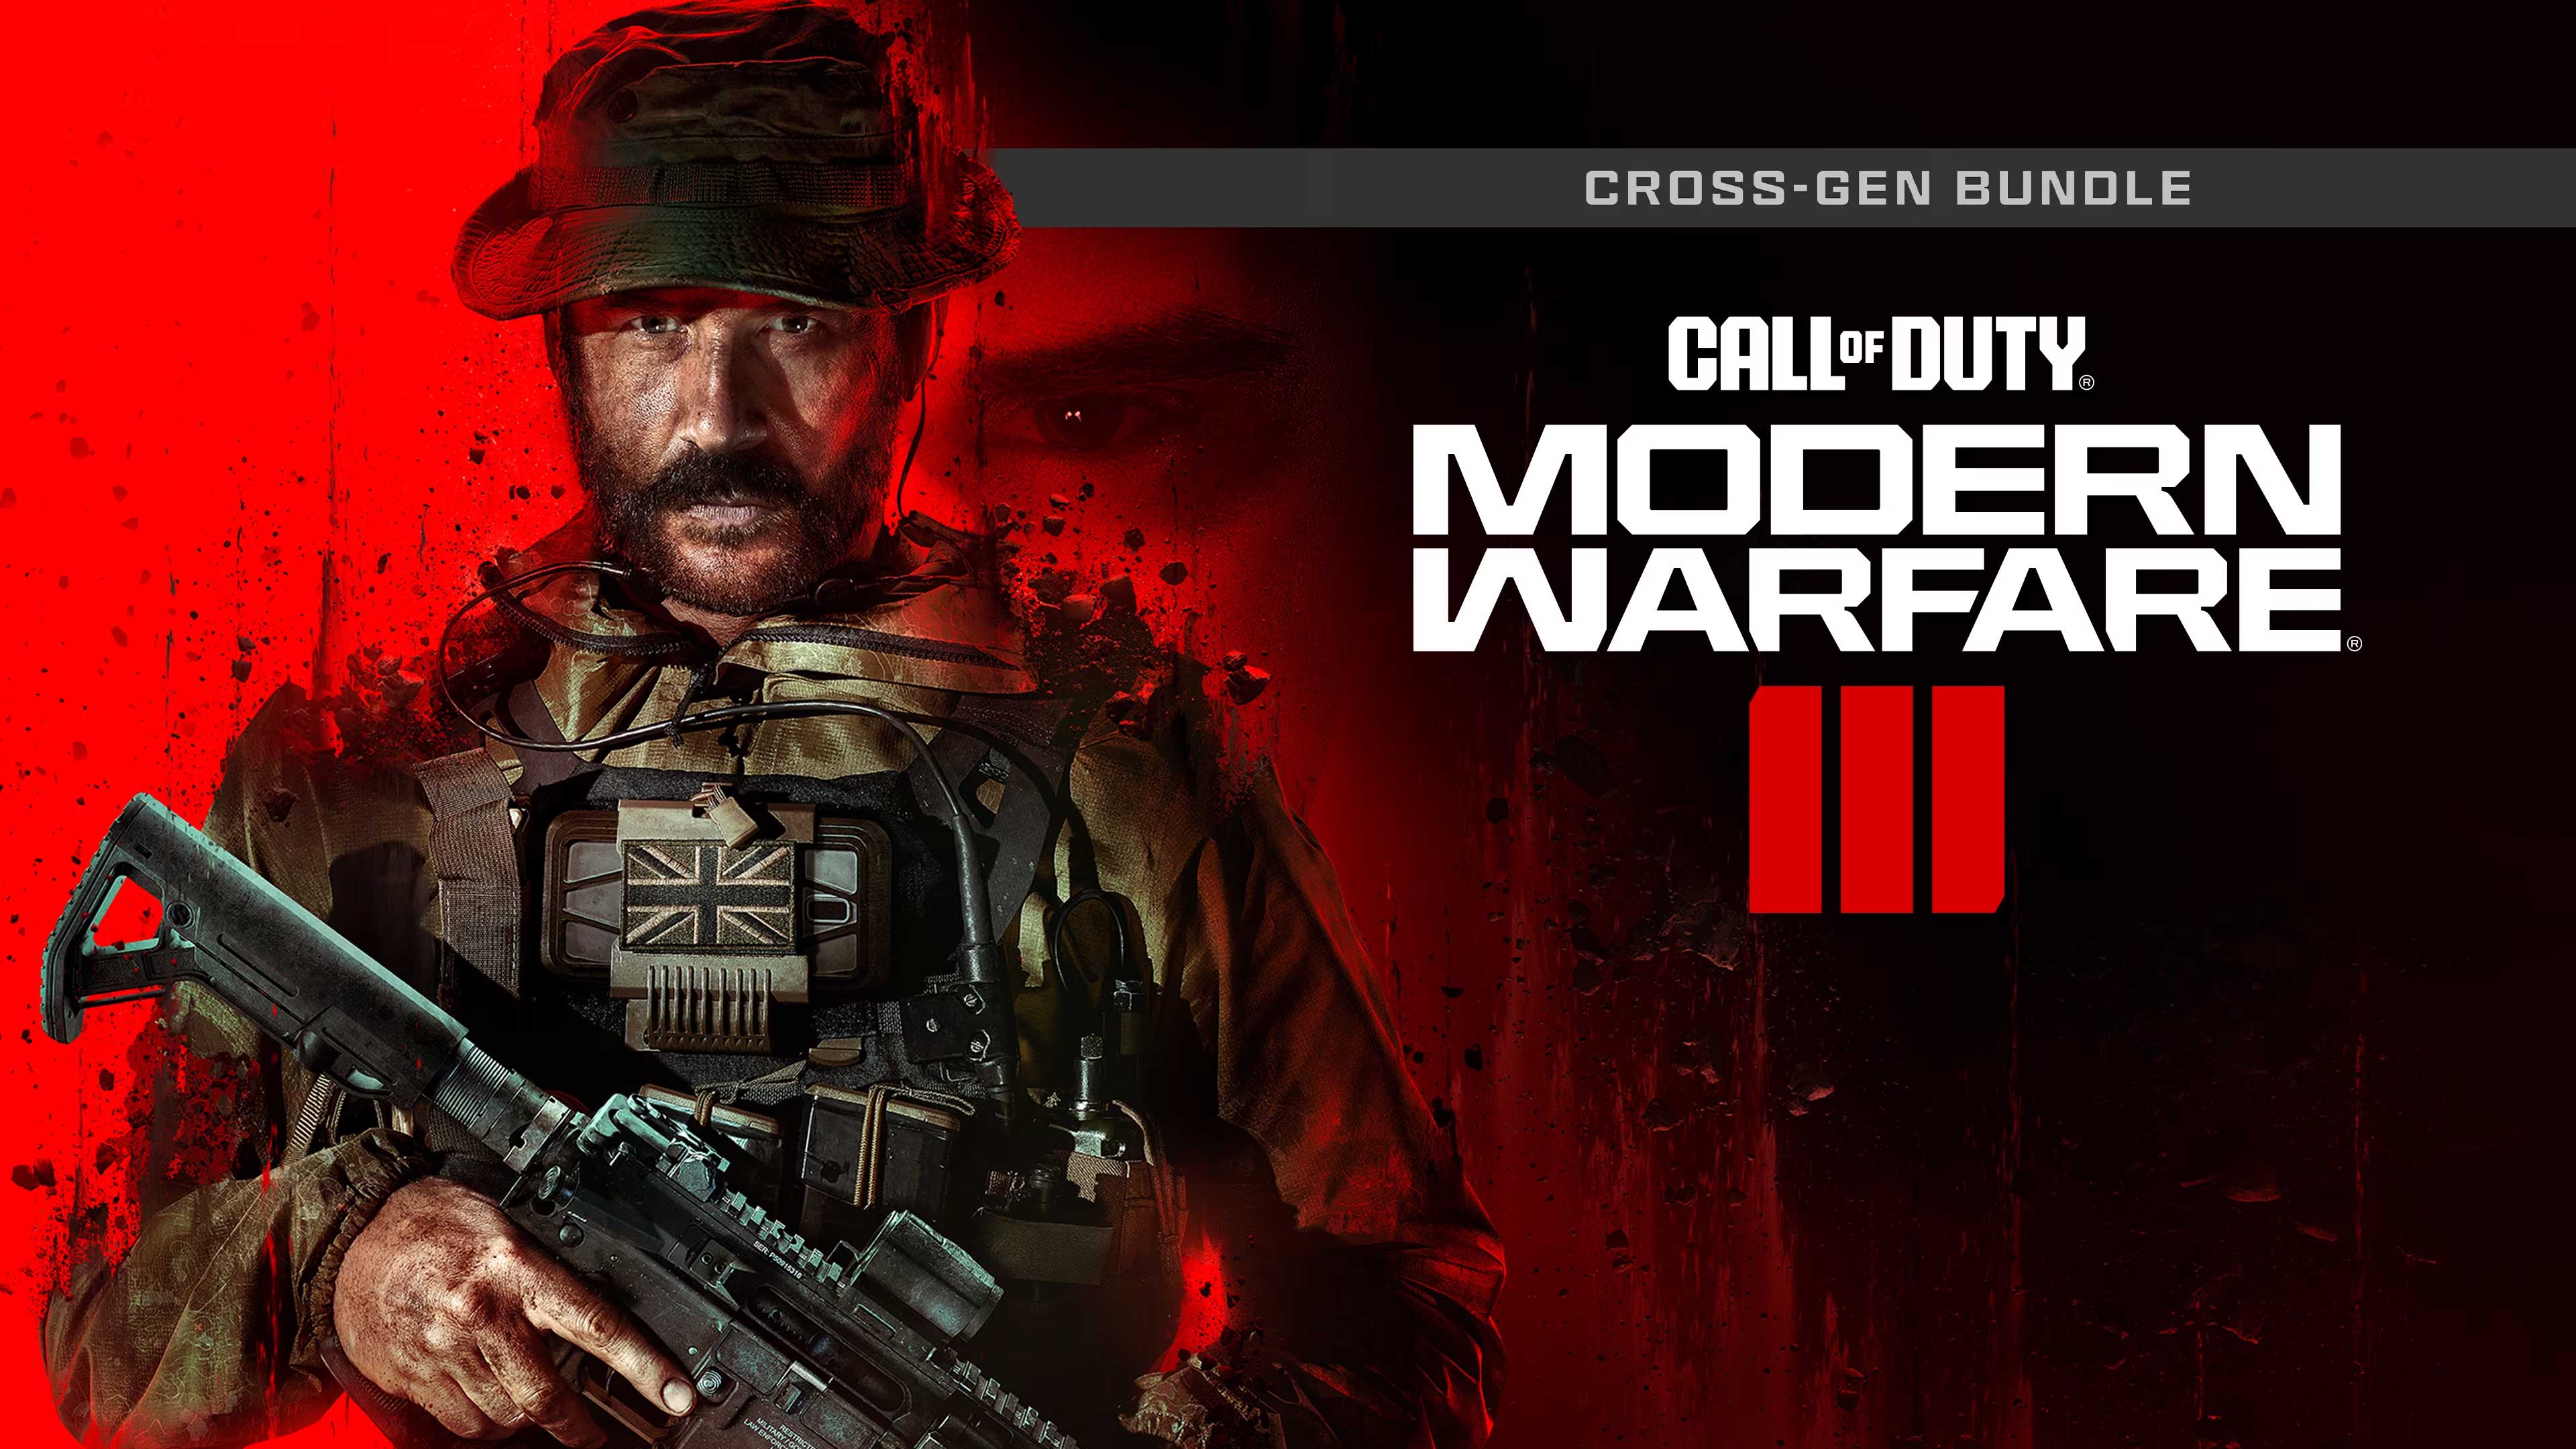 Call of Duty: Modern Warfare III - Cross-Gen Bundle, Games Boss Fights, gamesbossfights.com